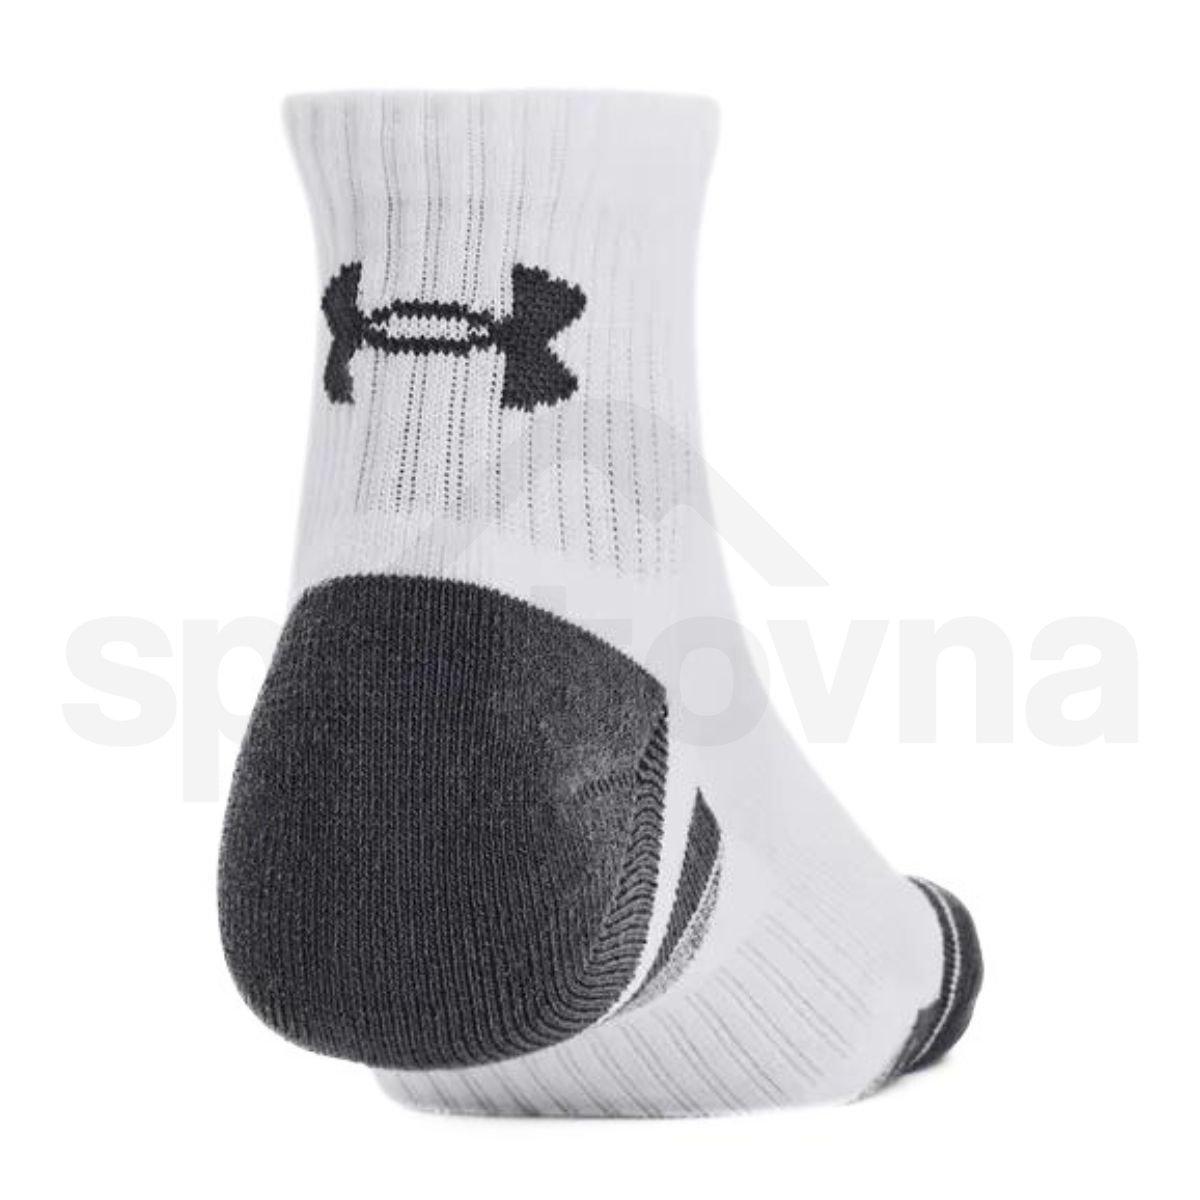 Ponožky Under Armour UA Performance Cotton 3p Qtr - bílá